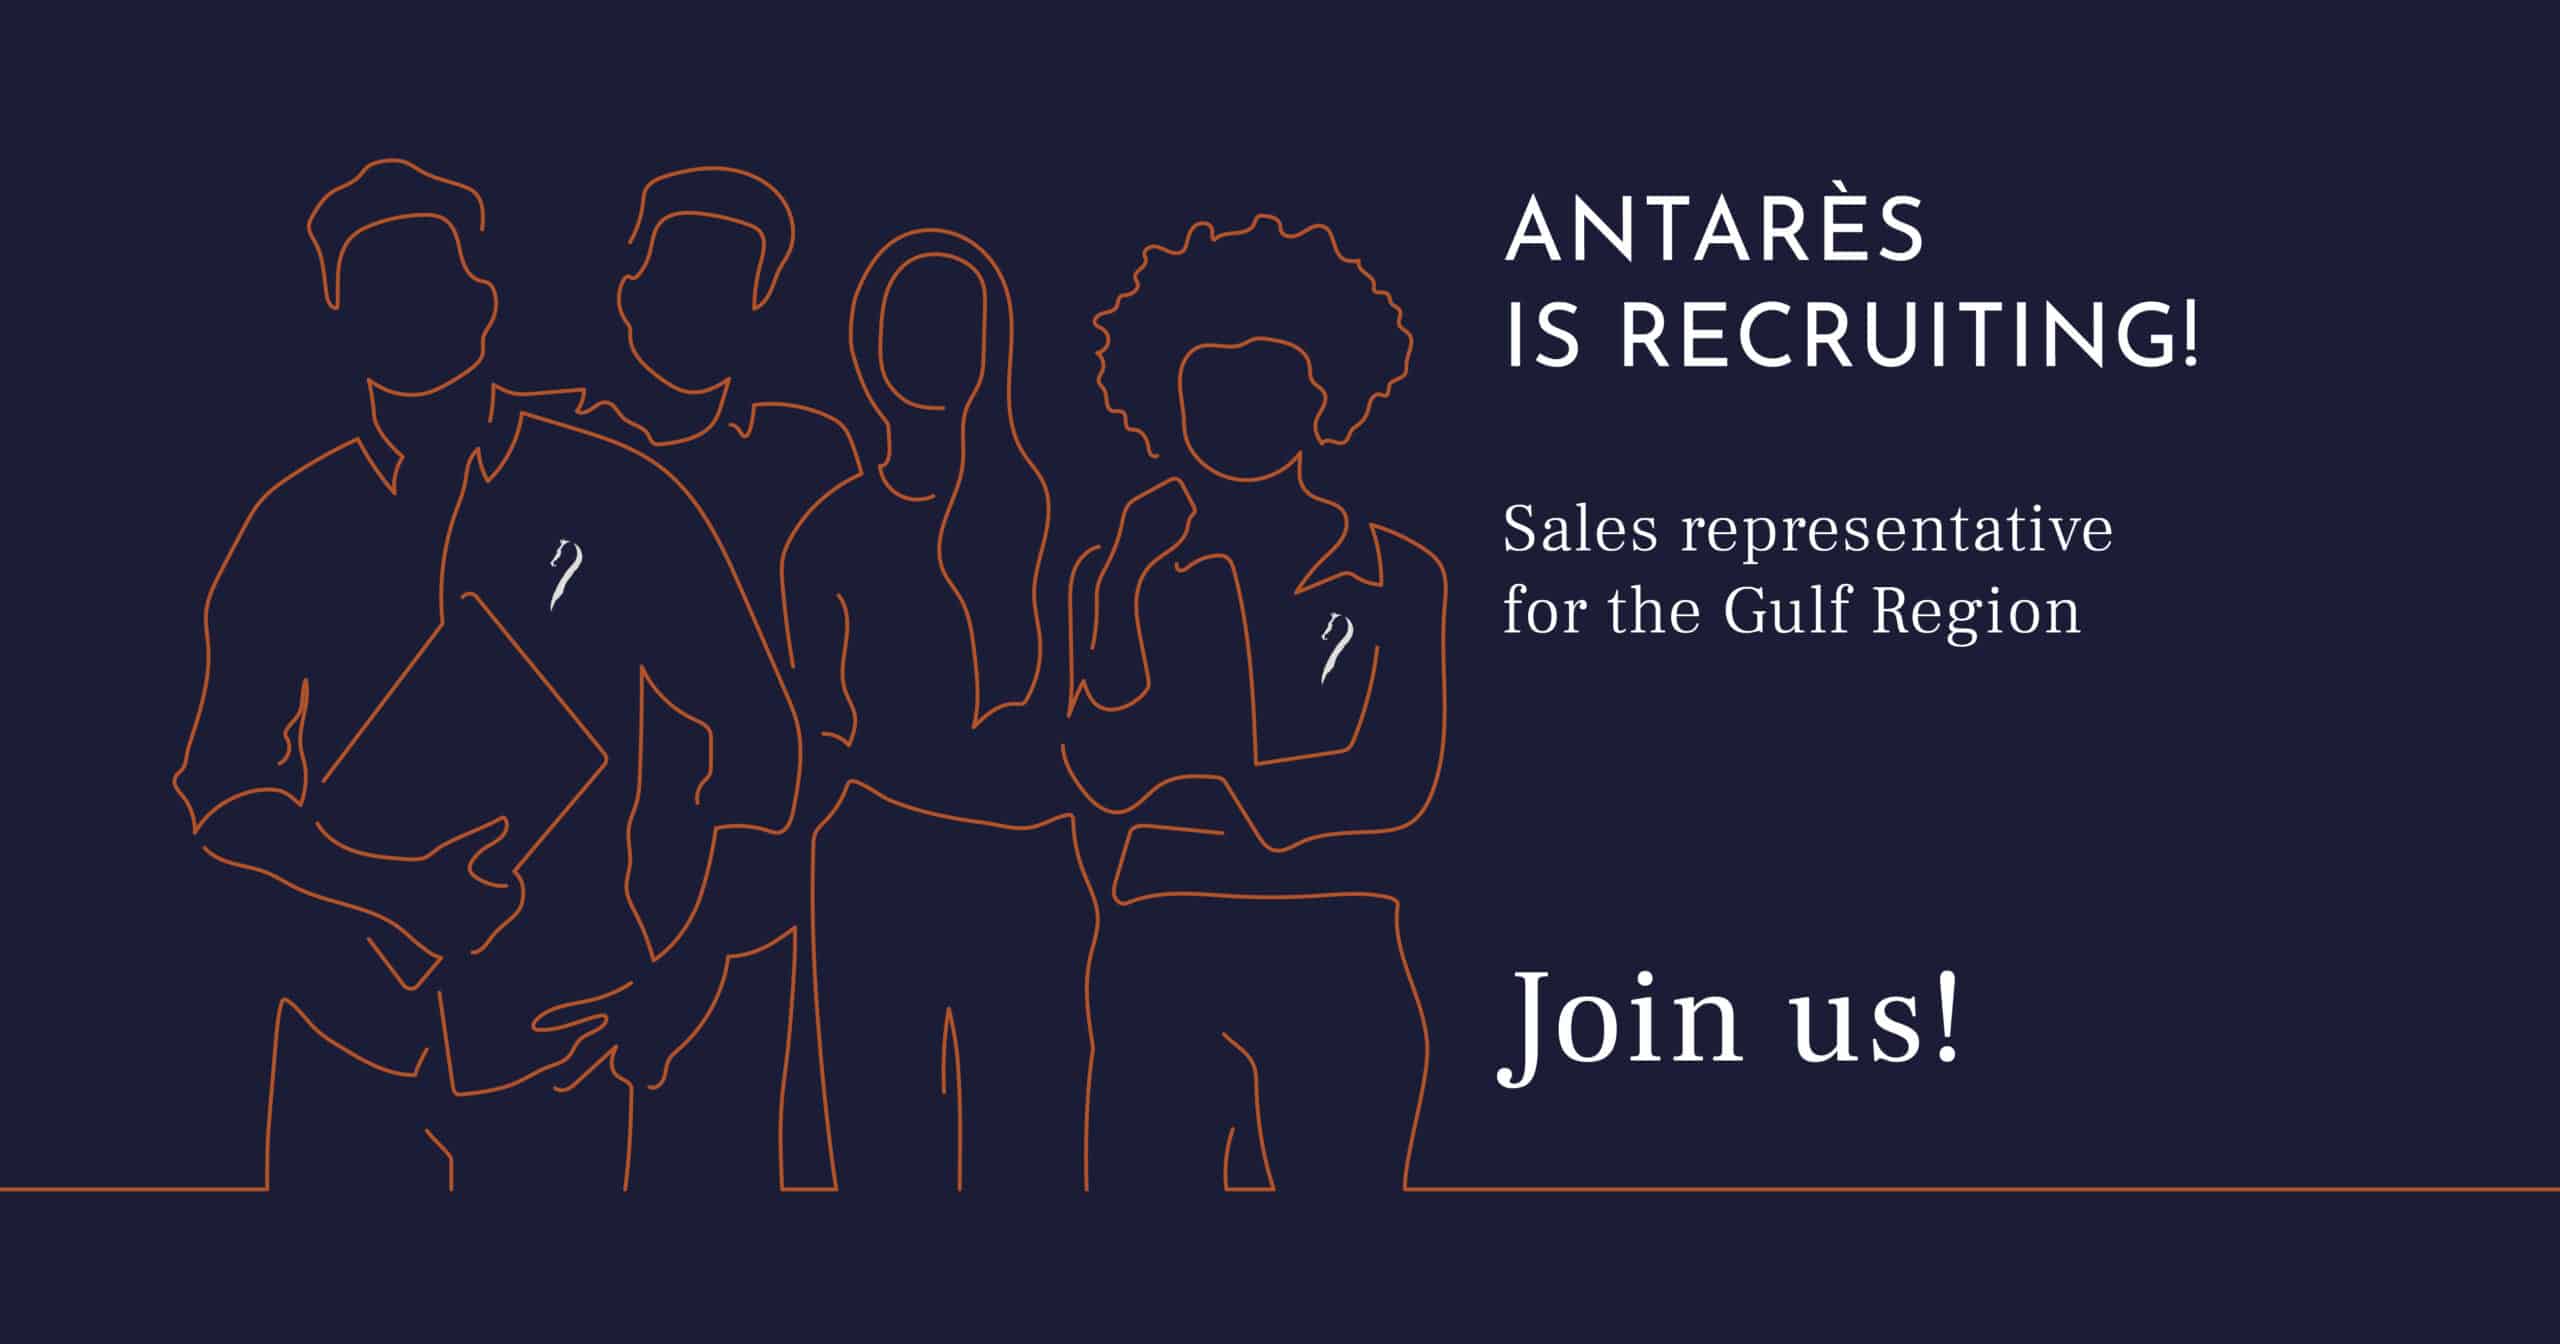 Recruitment of a sales representative for the Gulf Region